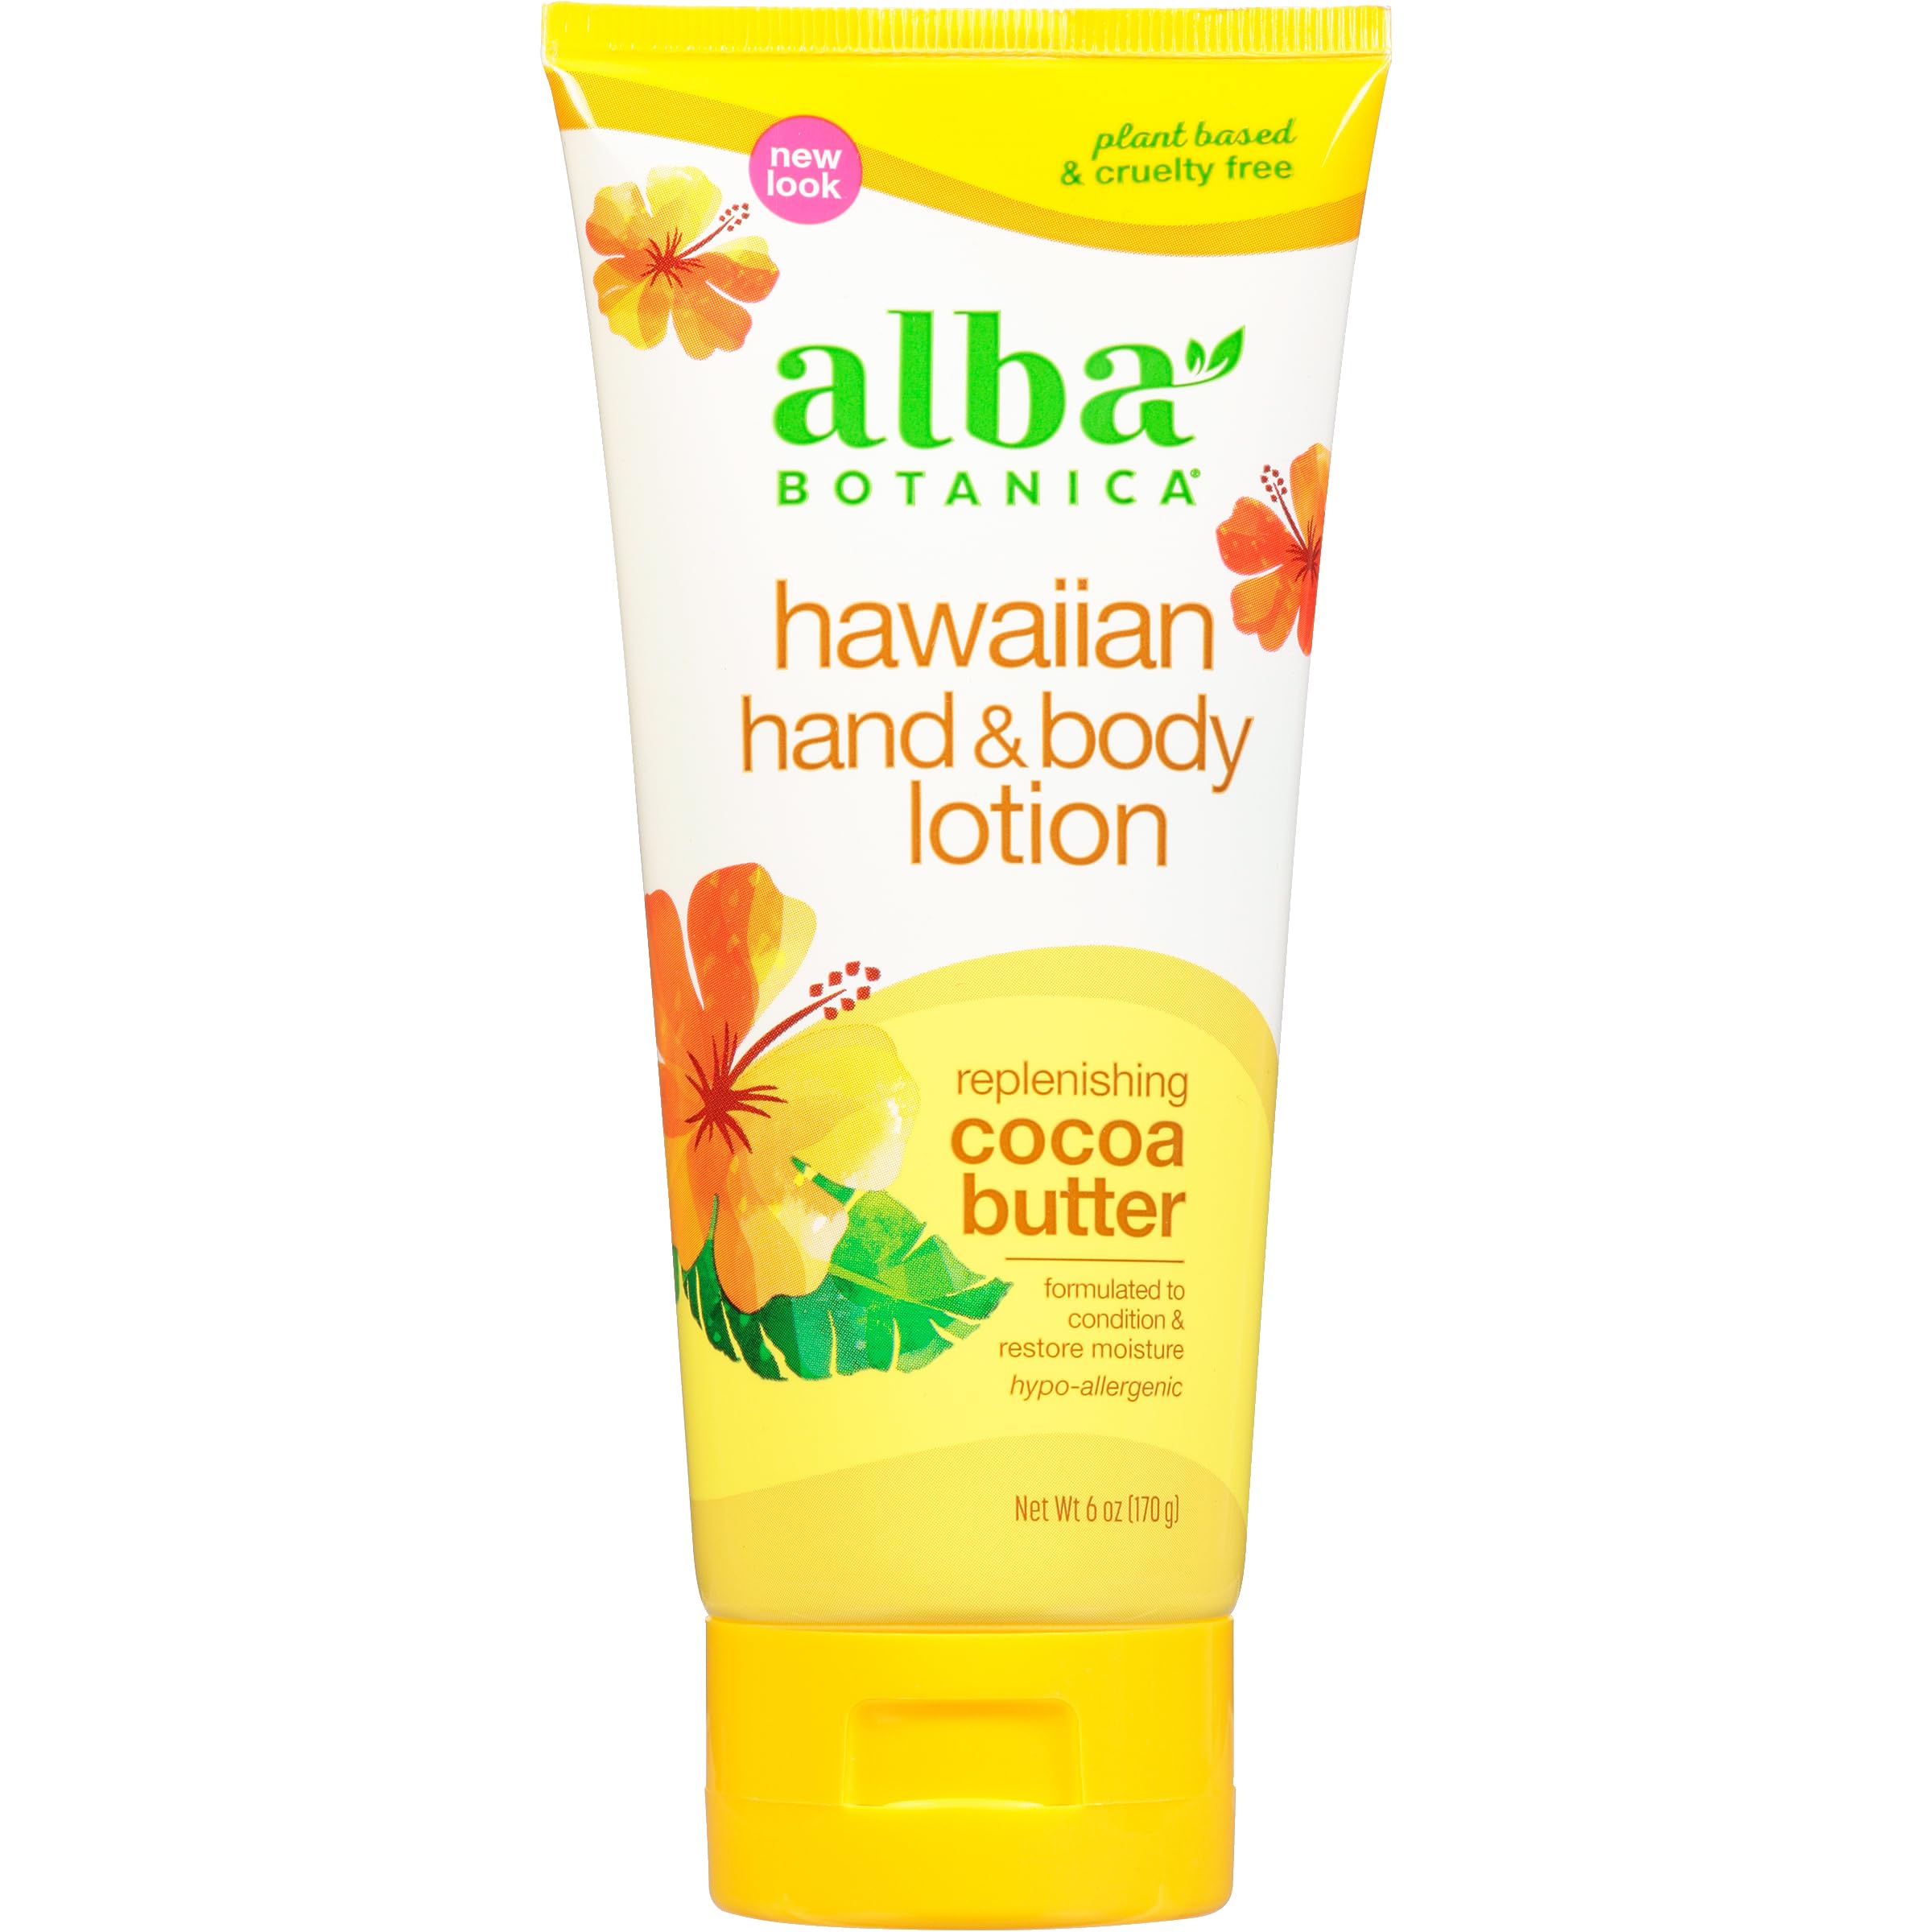 Alba Botanica Hawaiian Hand & Body Lotion, Replenishing Cocoa Butter, 6 Oz